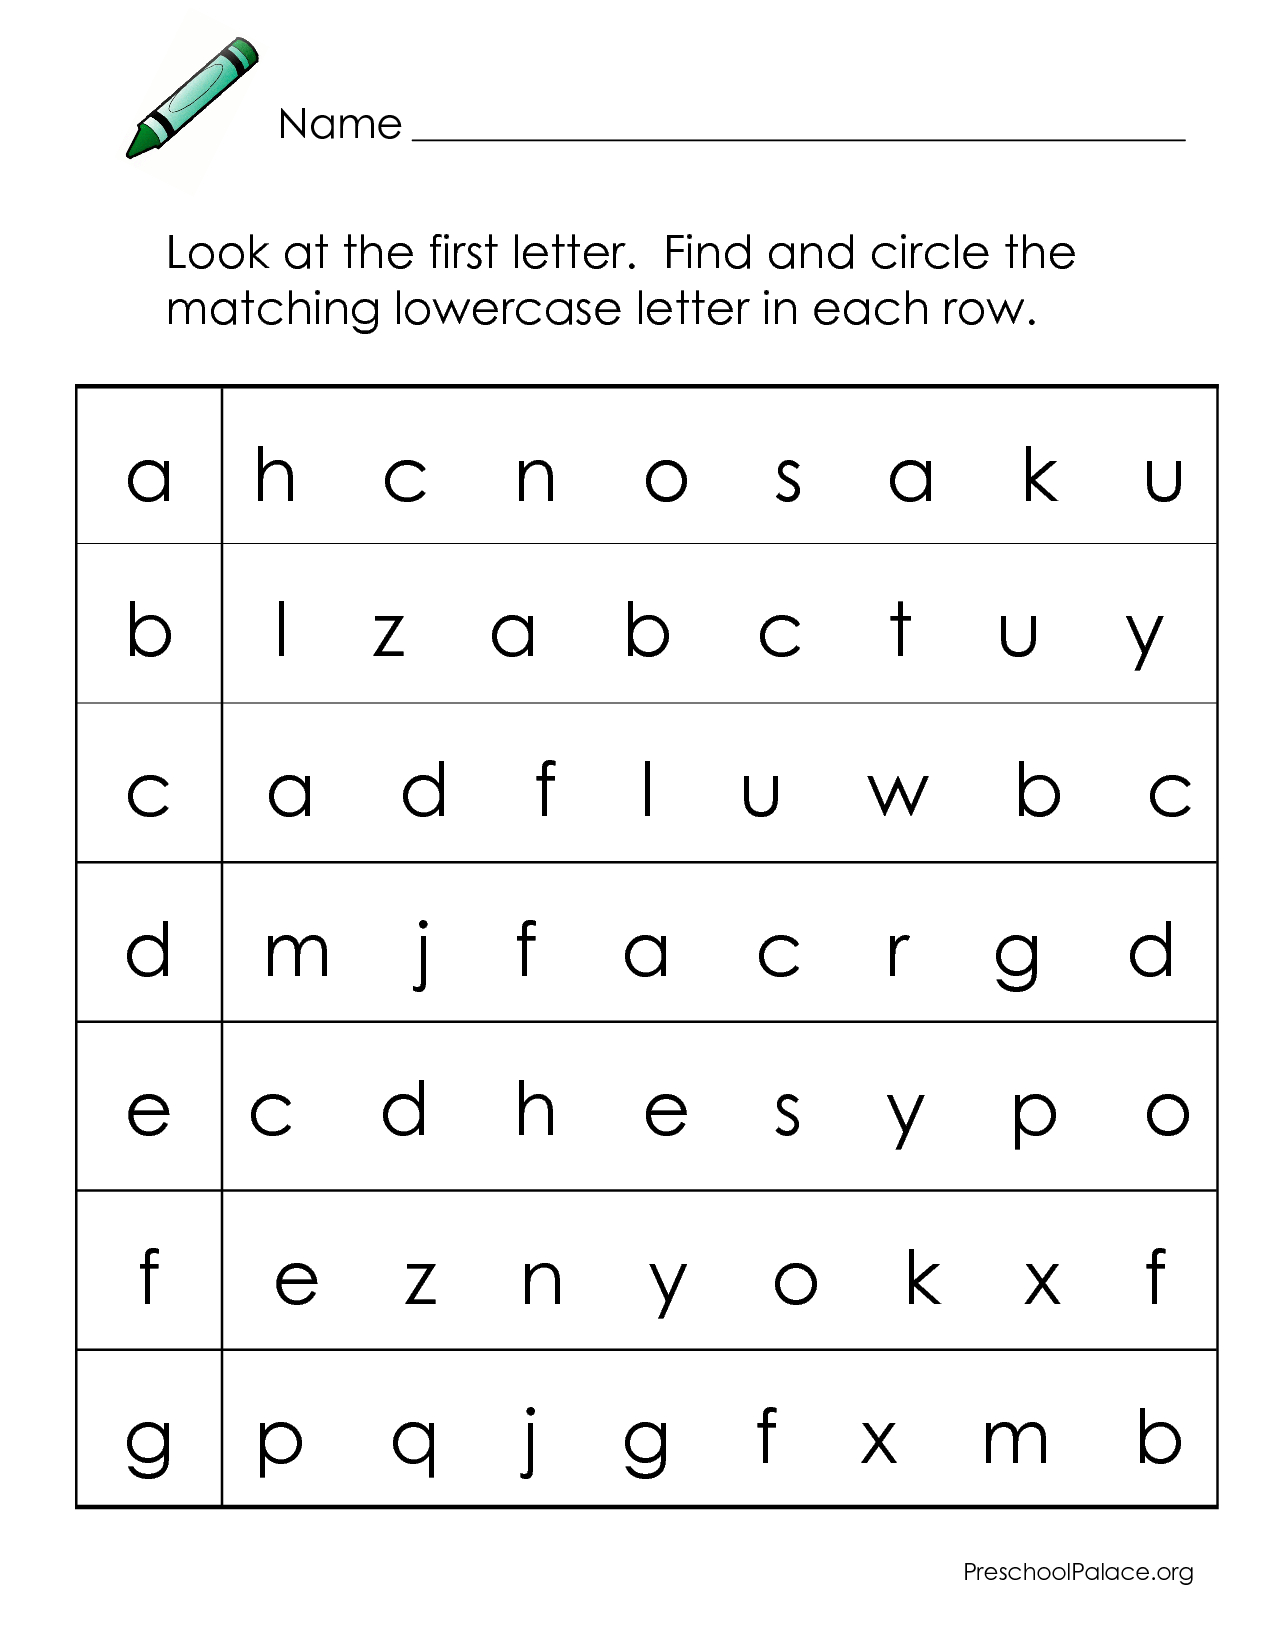 Alphabet Worksheets For Preschoolers | Abcs - Letter within Alphabet Match Up Worksheets